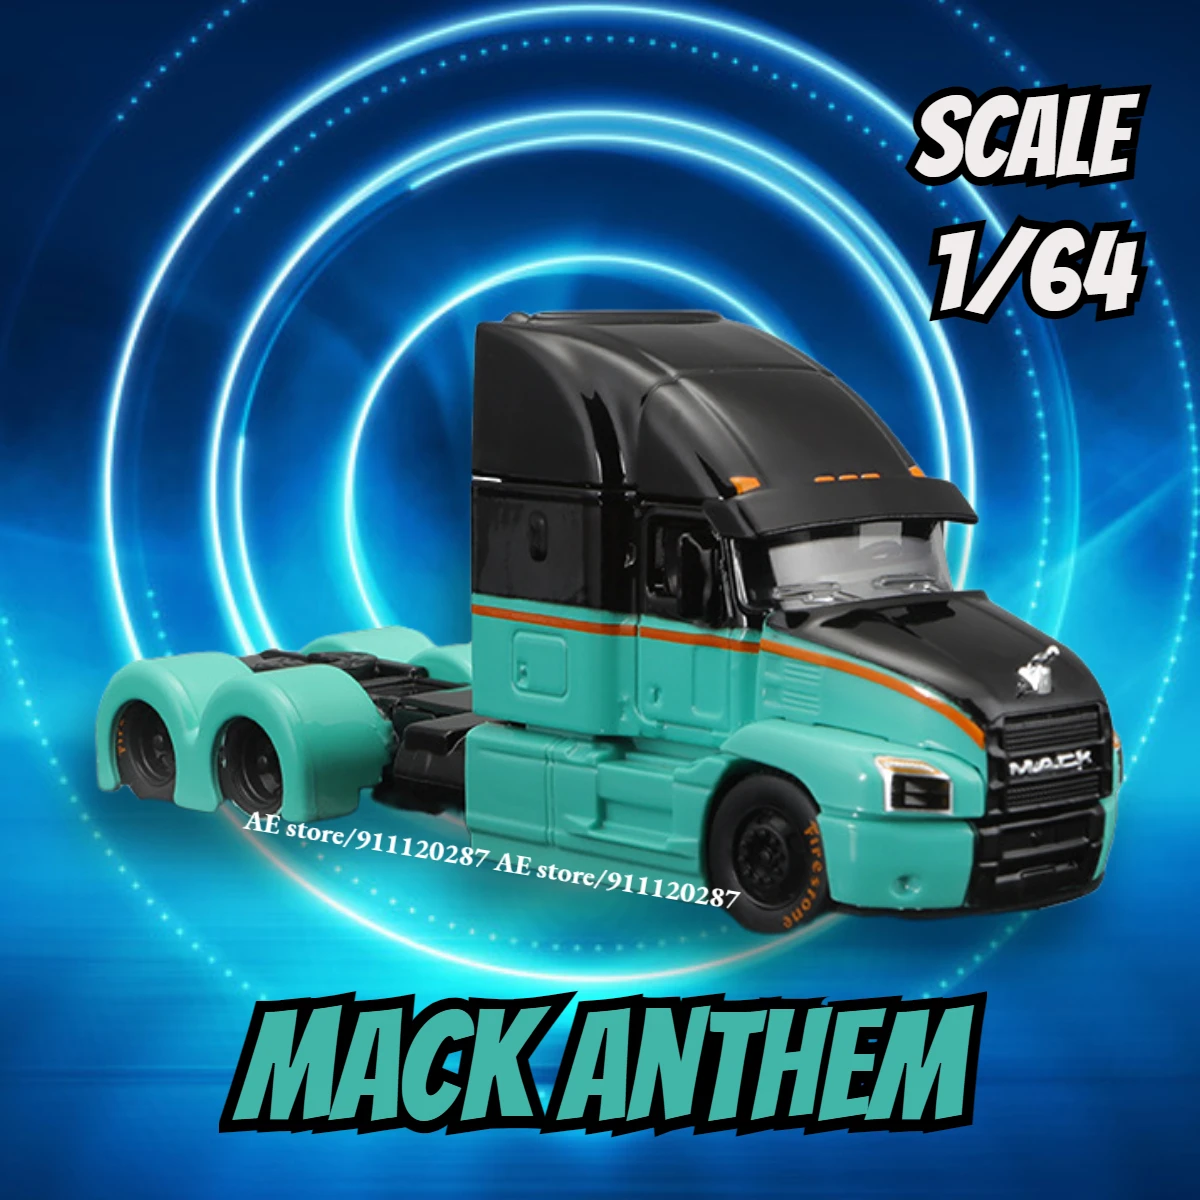 

Maisto 1/64 Mini Trailer Truck Car Model, MACK Anthem GREEN Scale Vehicle Art Diecast Replica Miniature Toy